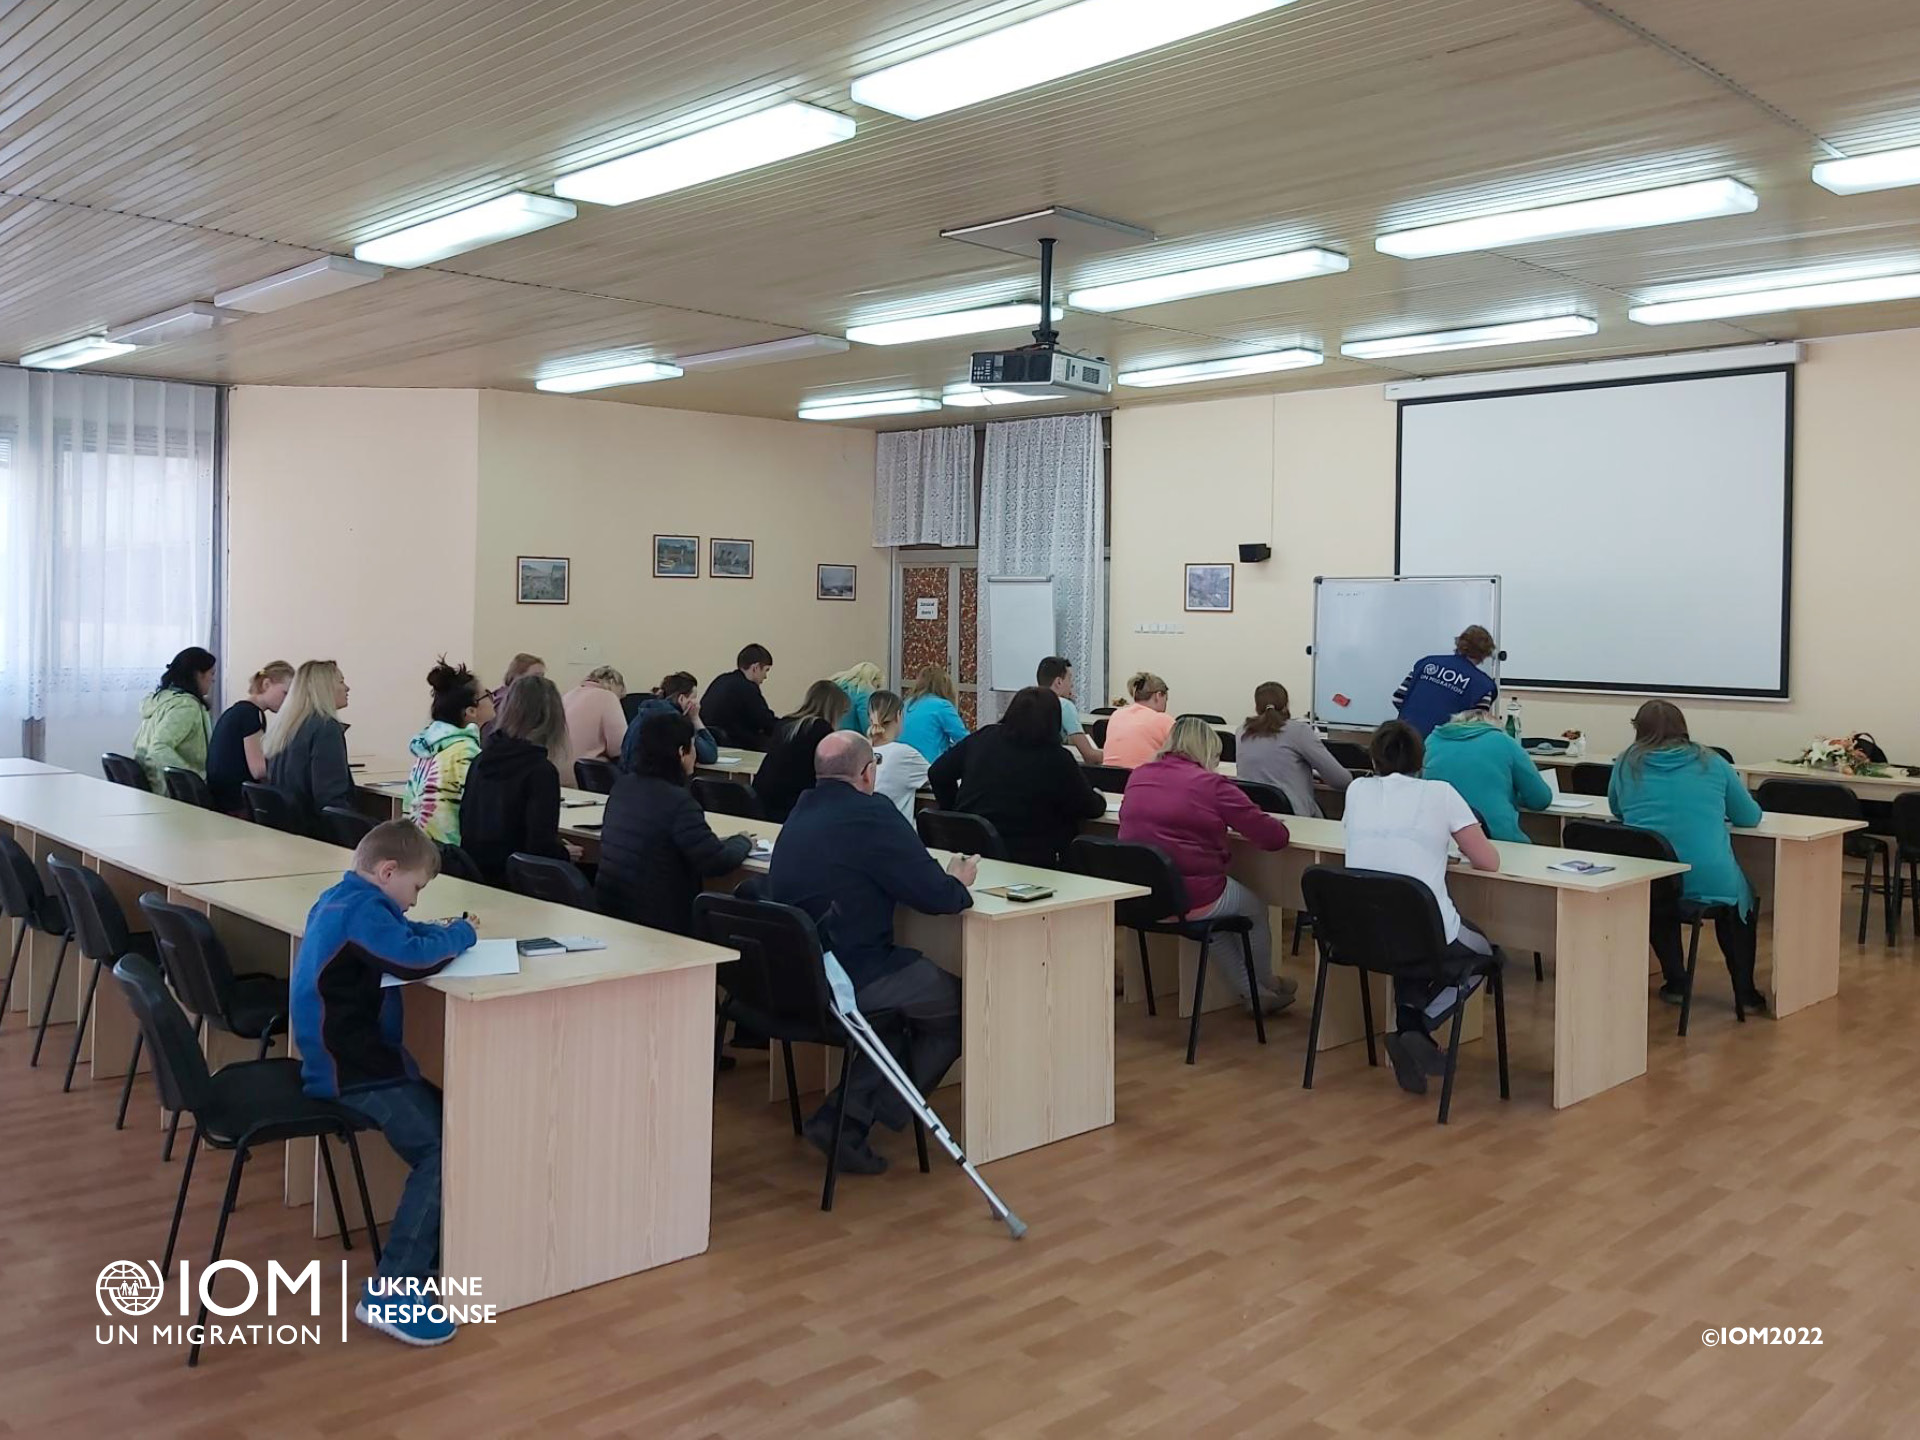 IOM Slovak language course at the Gabcikovo Accommodation Facility. Photo © International Organization for Migration (IOM) 2022.